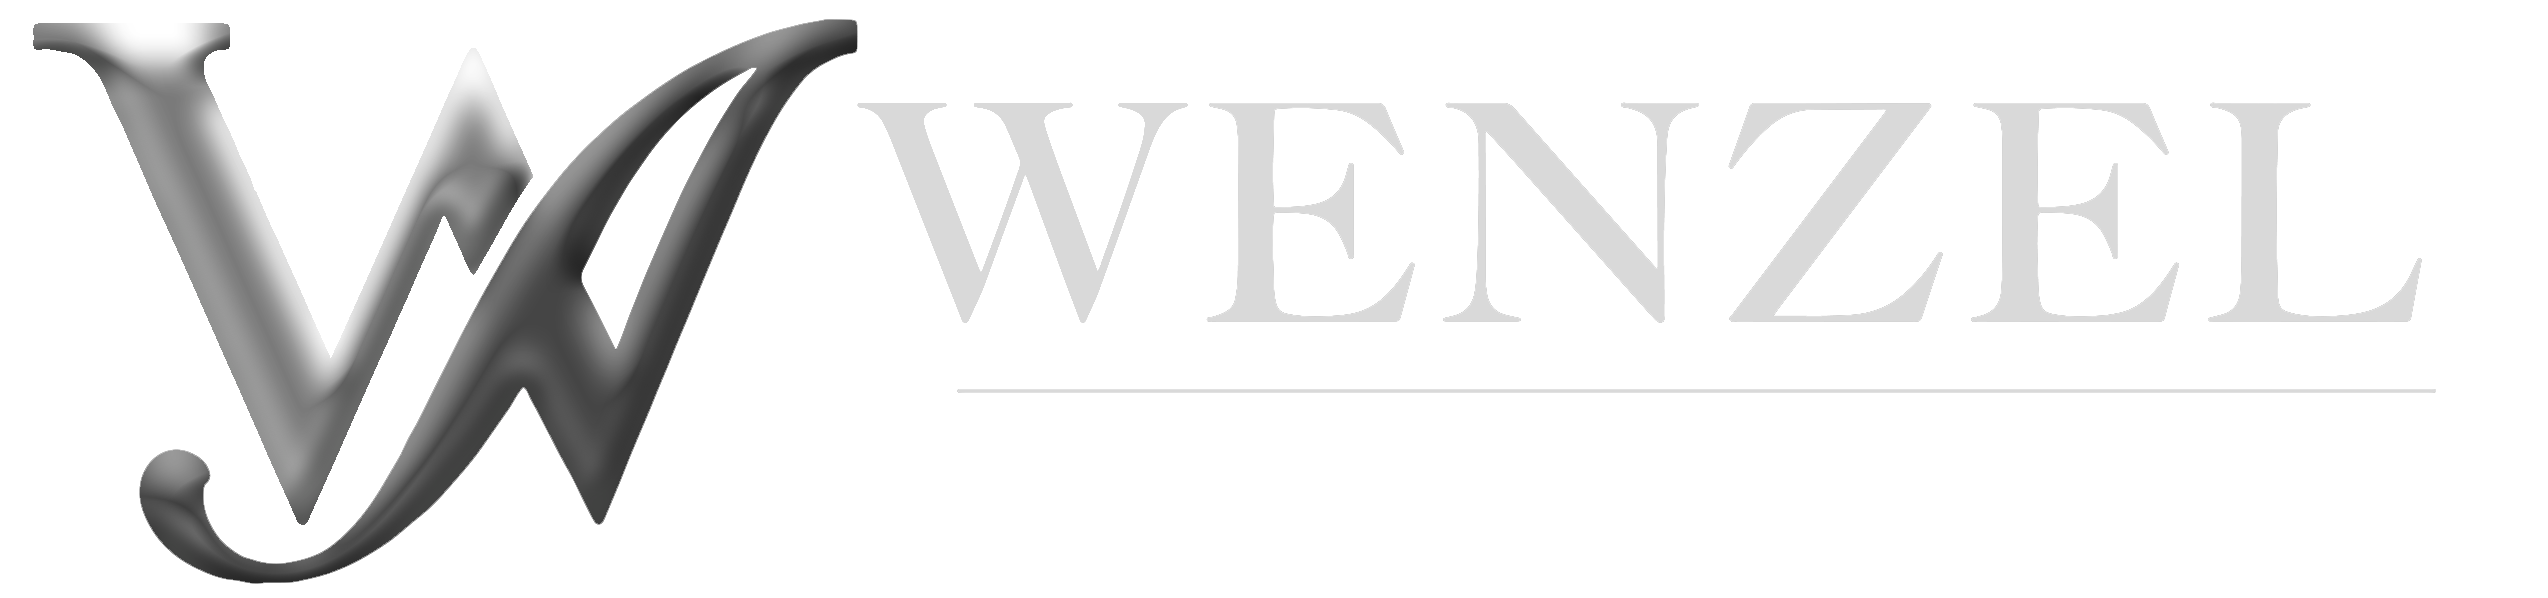 Wenzel & Associates